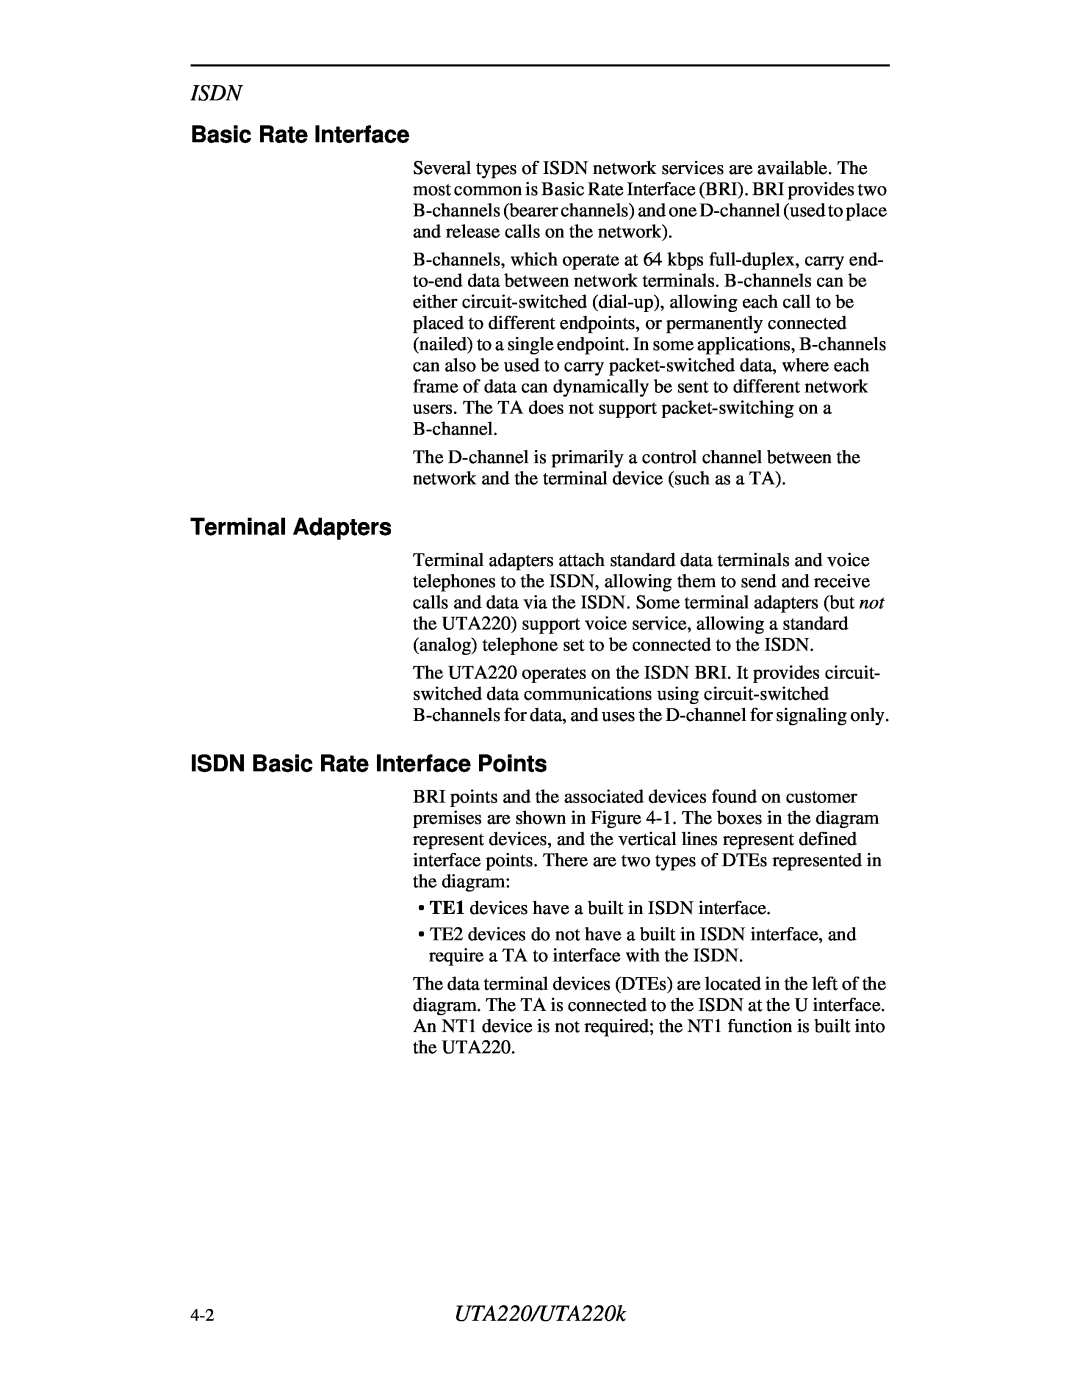 Northern UTA220/UTA220k manual Terminal Adapters, ISDN Basic Rate Interface Points, Isdn 